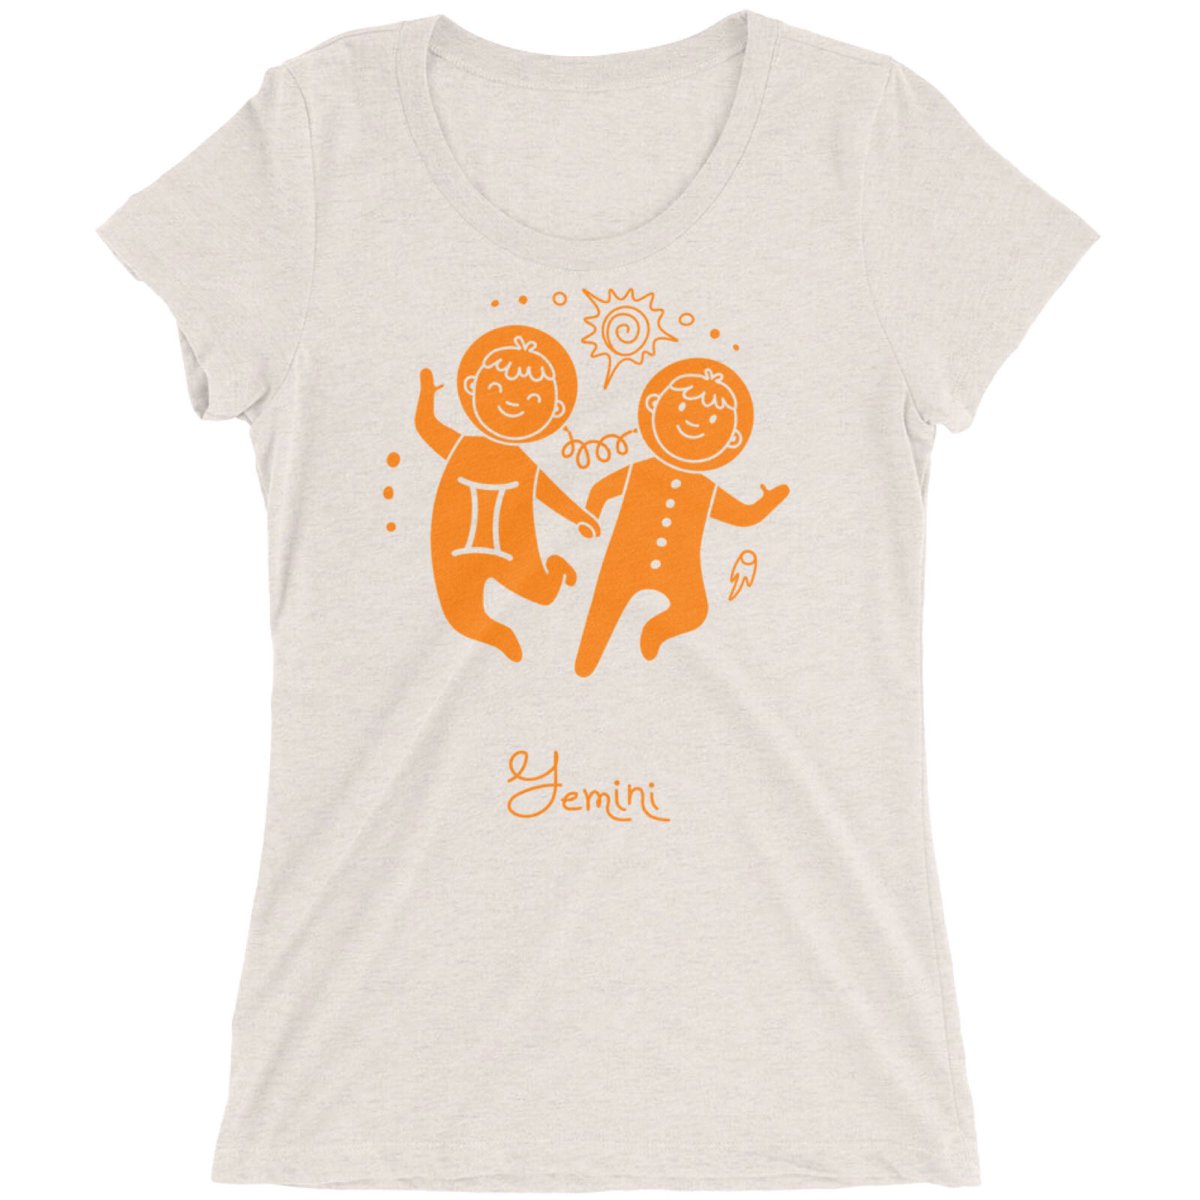 New Zodiac Gemini T-Shirt Available!
.
egfitwear.com
.
#birthday #flexibility #tshirt #customtshirt #zodiacsigns #legbehindhead #footbehindhead #stretchitout #bendyyogi #forwardfold #fitlife #zodiacsigns #gymshirt #gemini #igyoga #vegan #tuesdaythoughts #bodybuilding